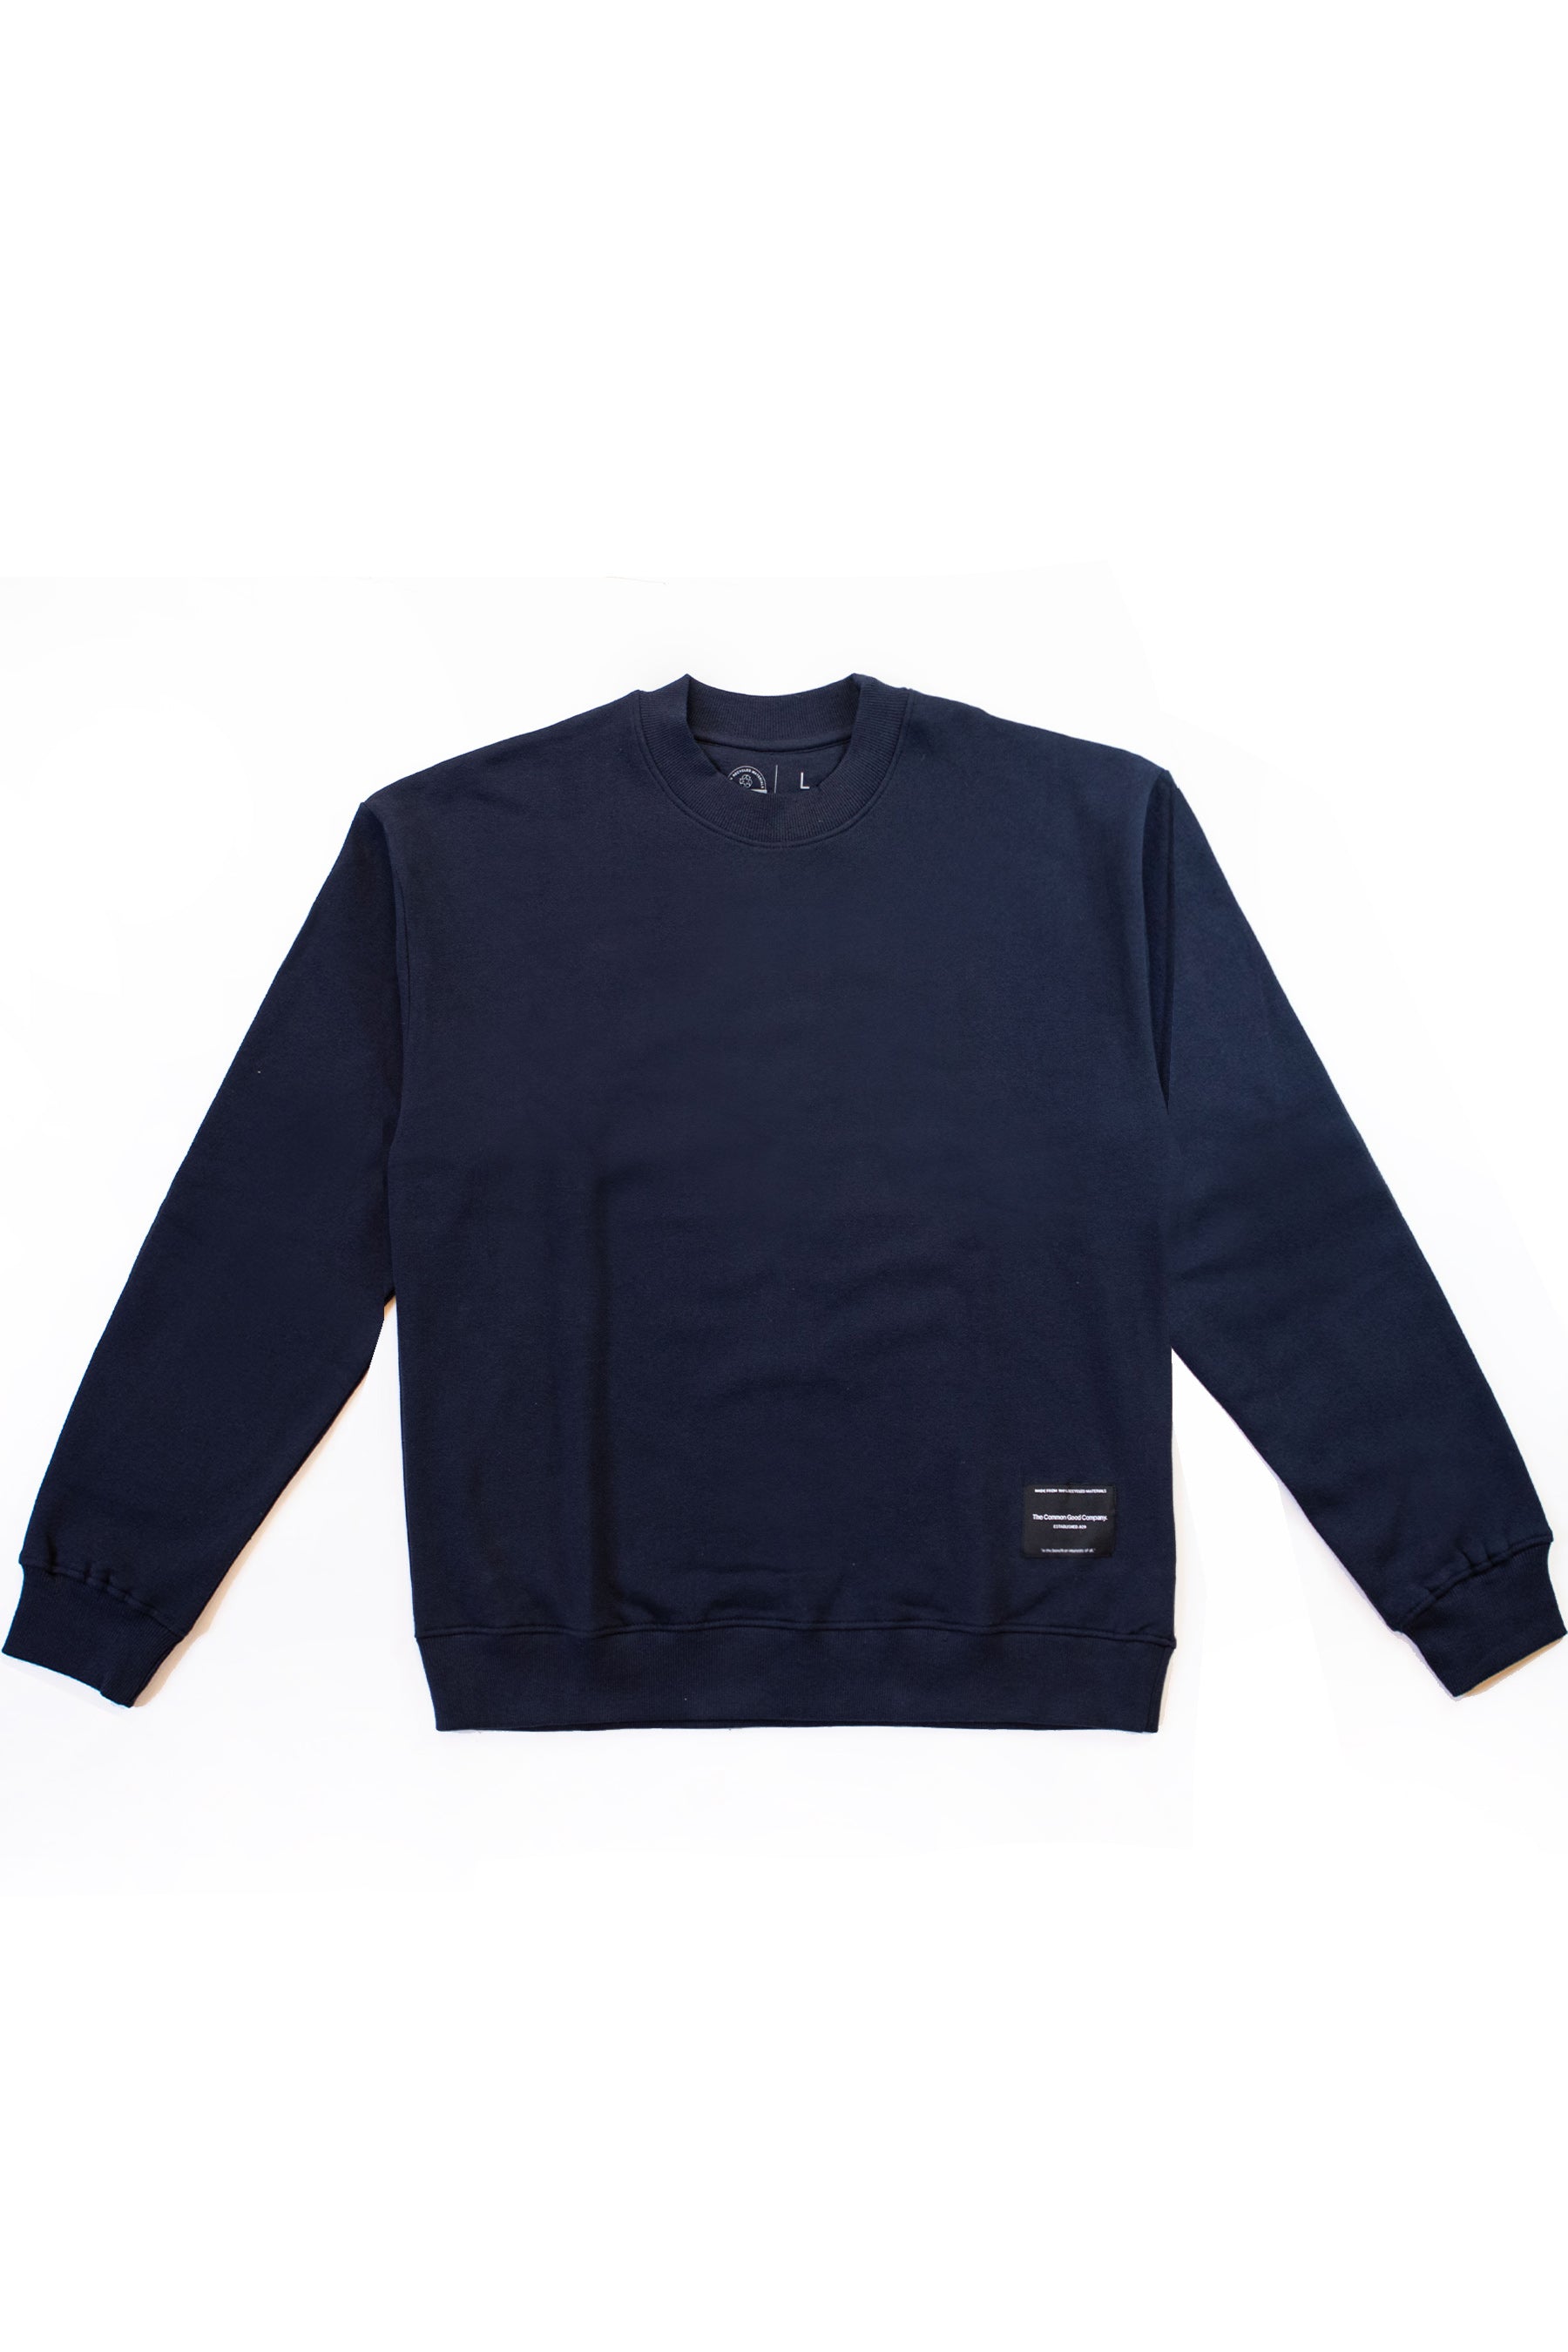  Plain Dane Navy Box Fit Sweater - Patch Adams Fleece